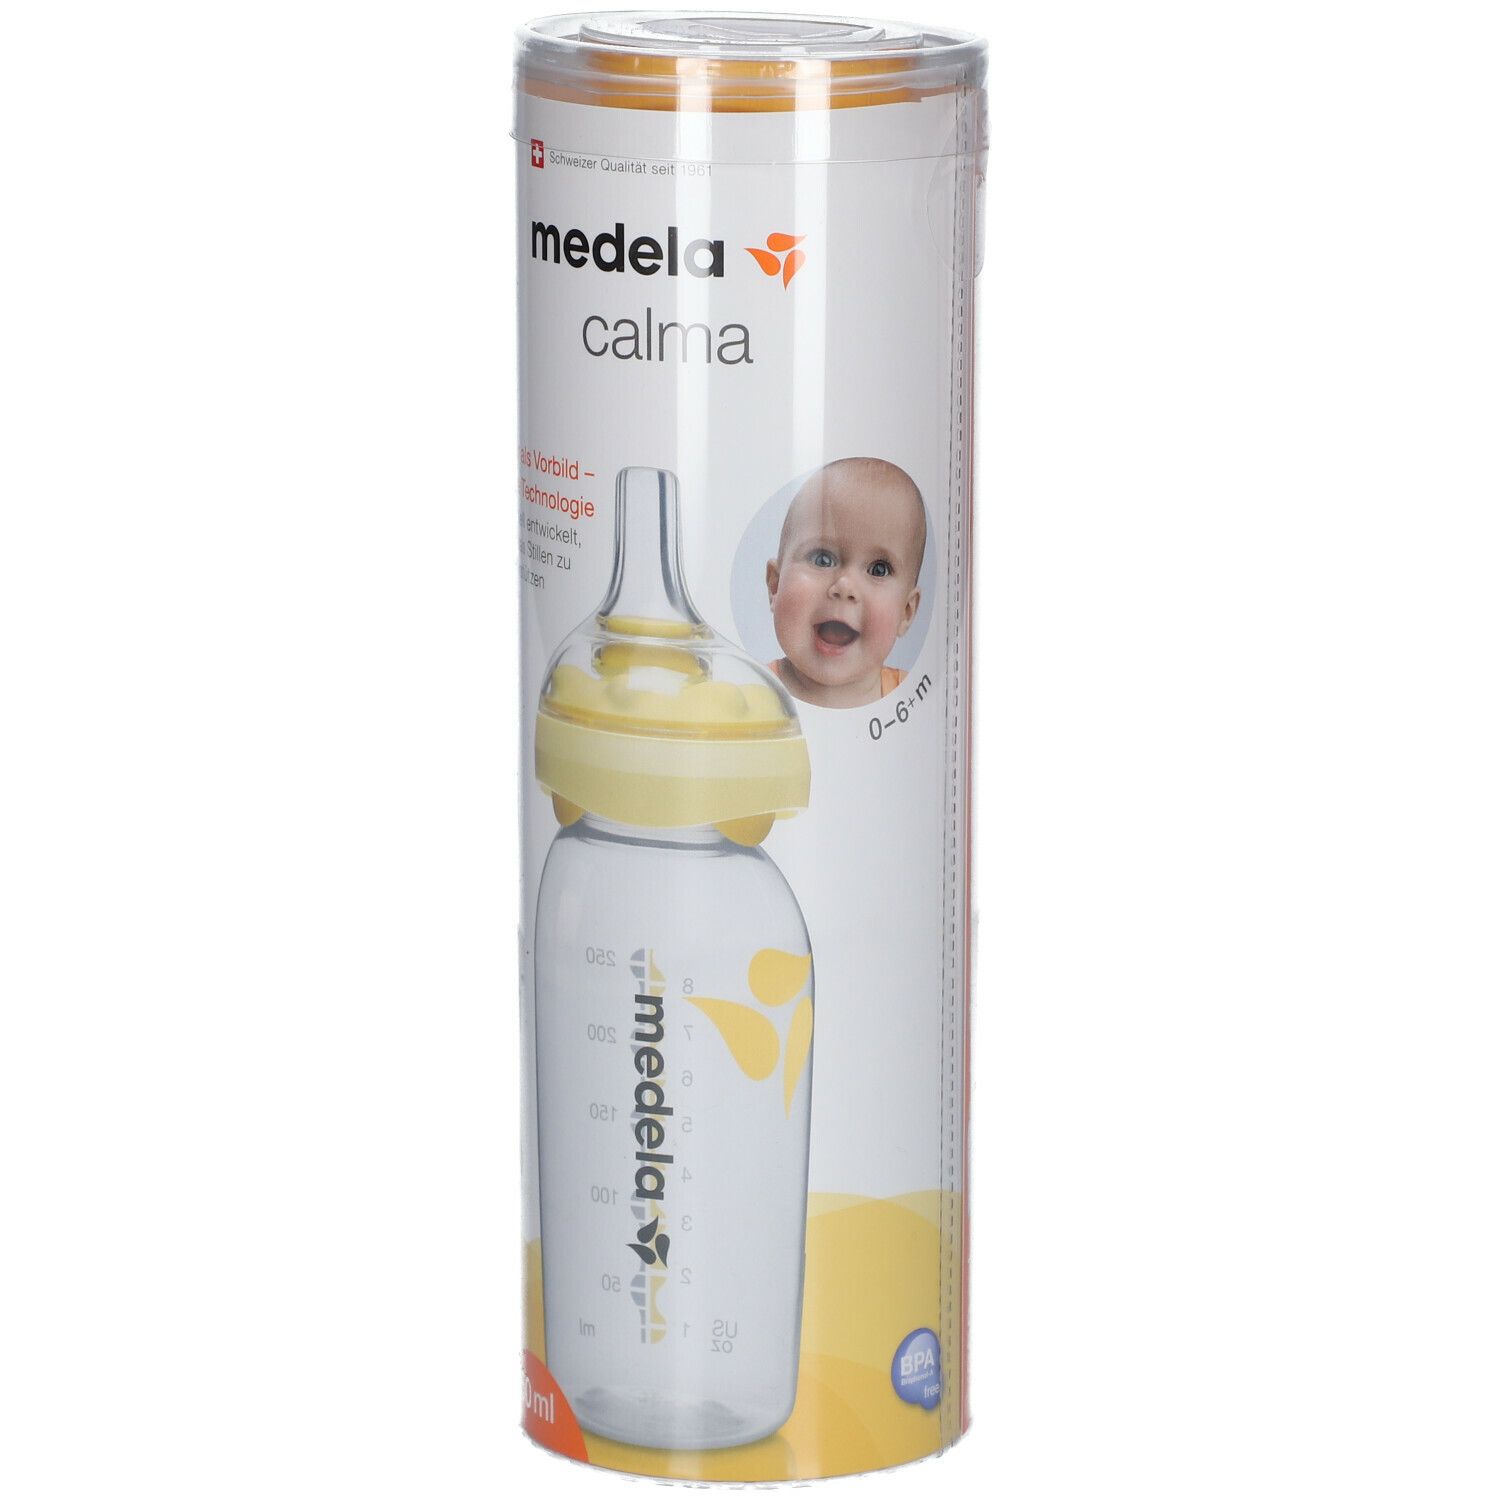 Medela Calma Babyflasche 250ml mit Calma Solitaire Silikonsauger, 0-6 Monate